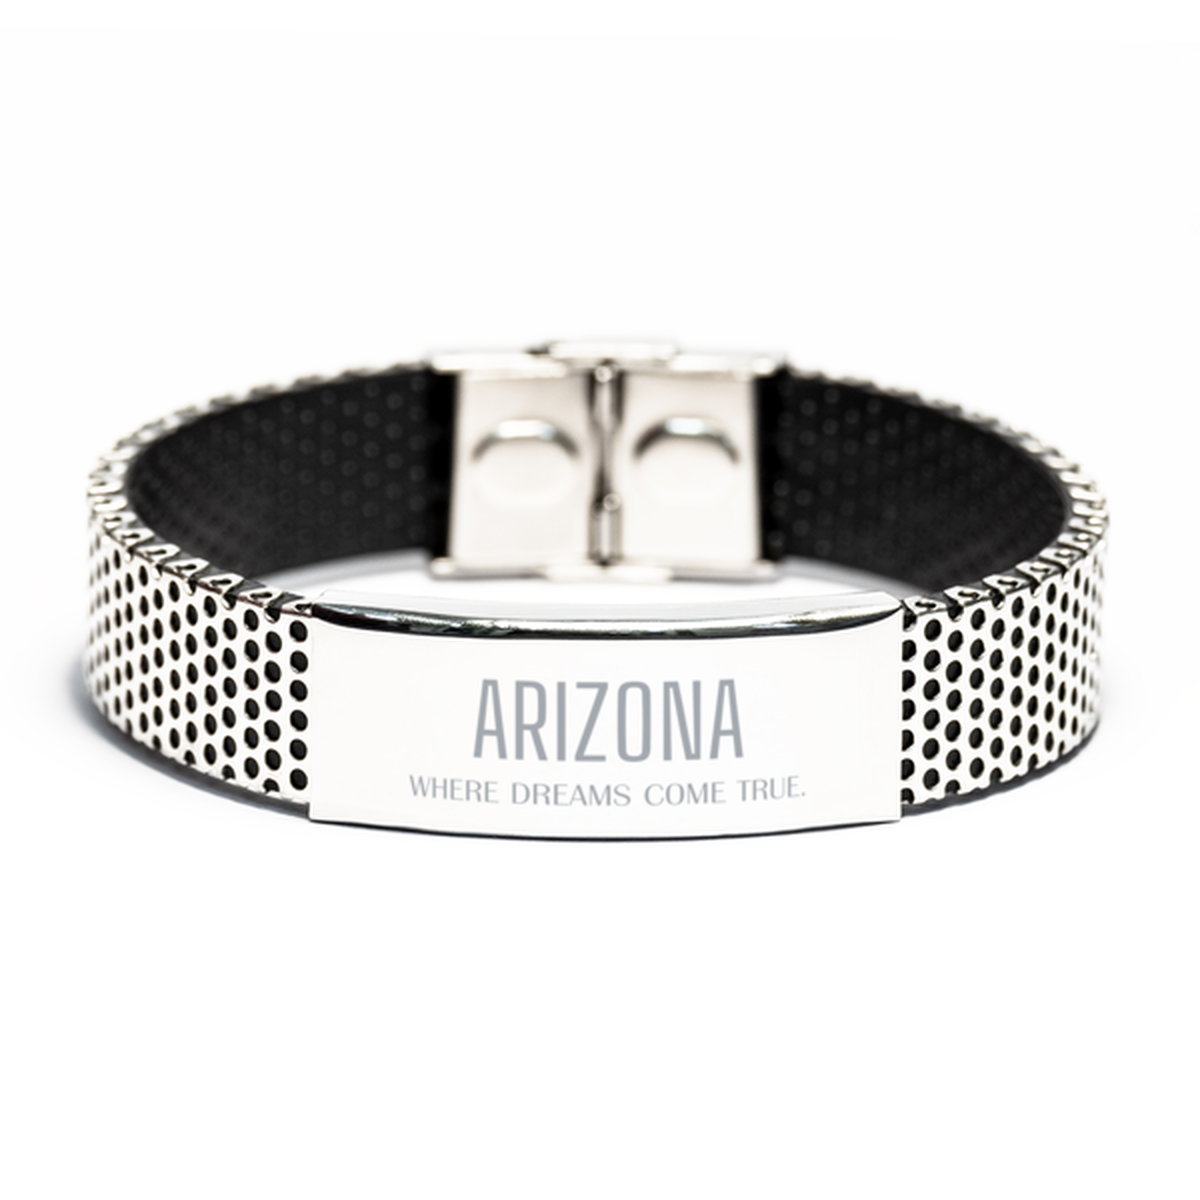 Love Arizona State Stainless Steel Bracelet, Arizona Where dreams come true, Birthday Inspirational Gifts For Arizona Men, Women, Friends